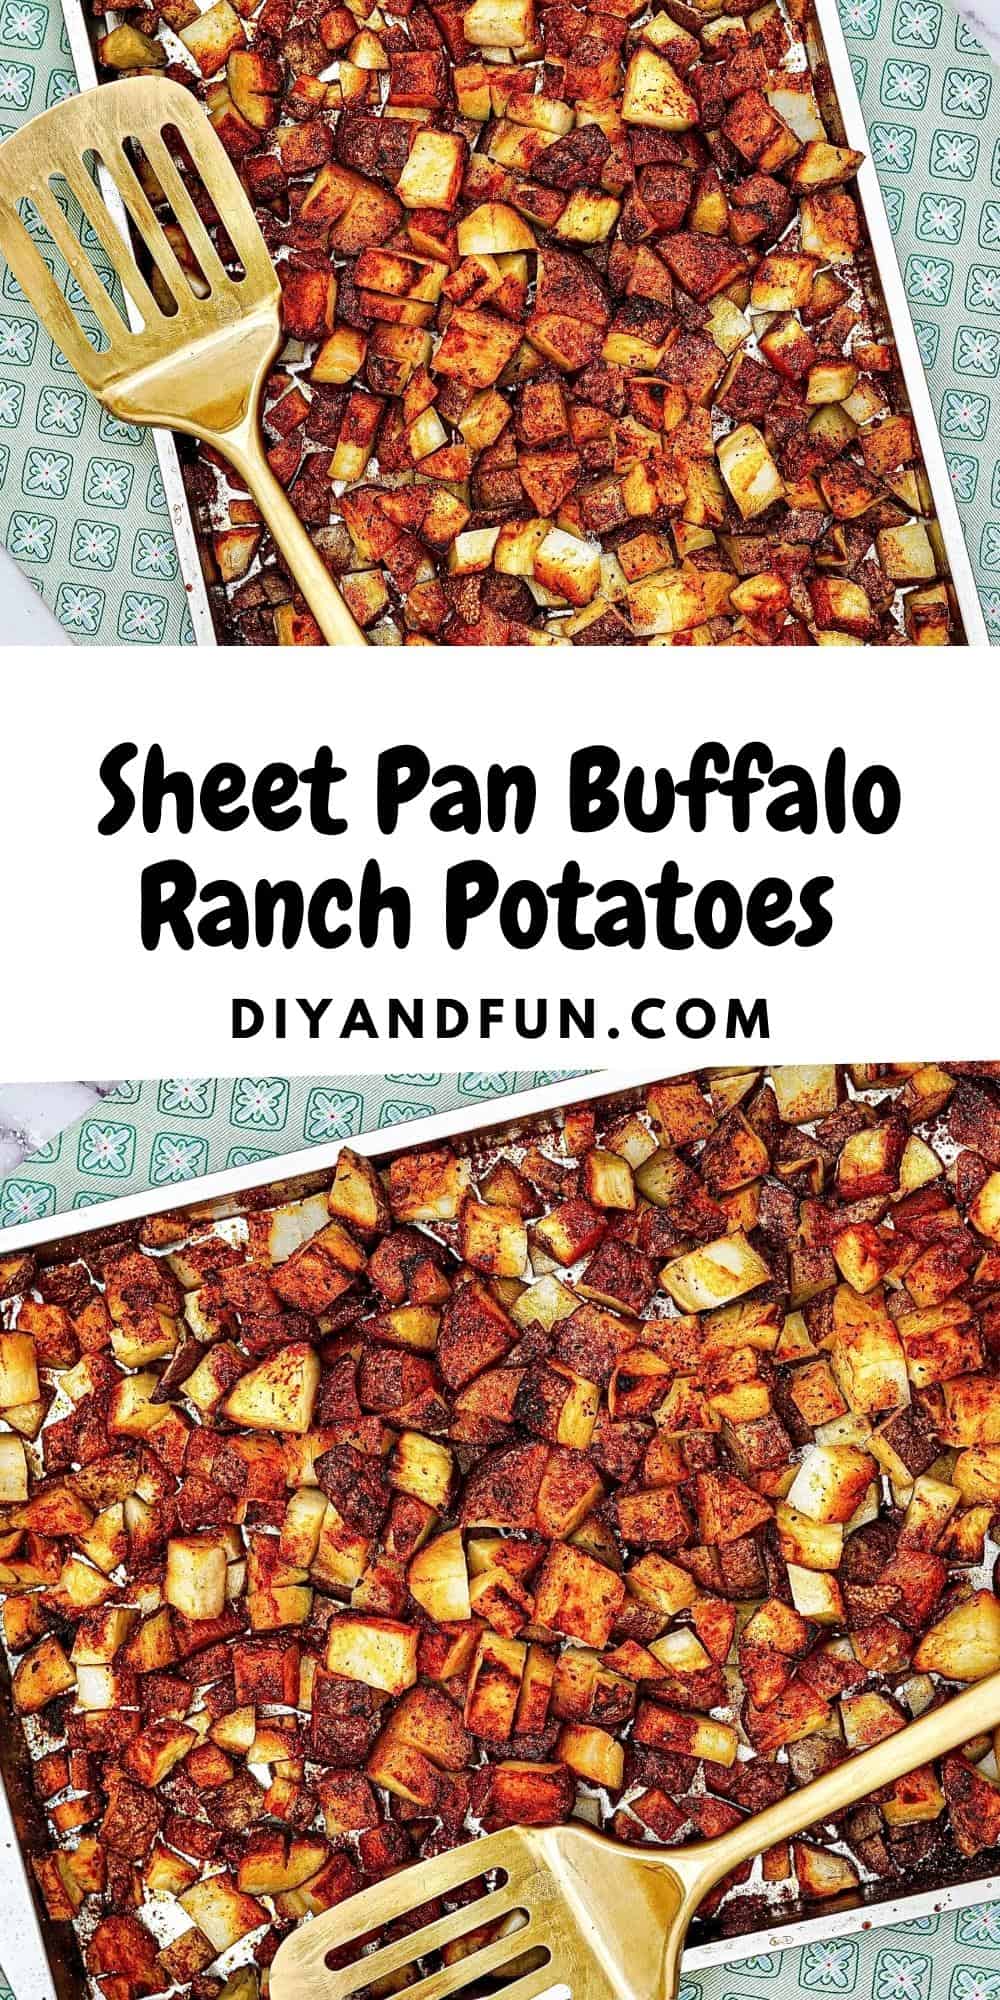 Sheet Pan Buffalo Ranch Potatoes, a simple recipe idea for making oven baked potato chunks that are seasoned.